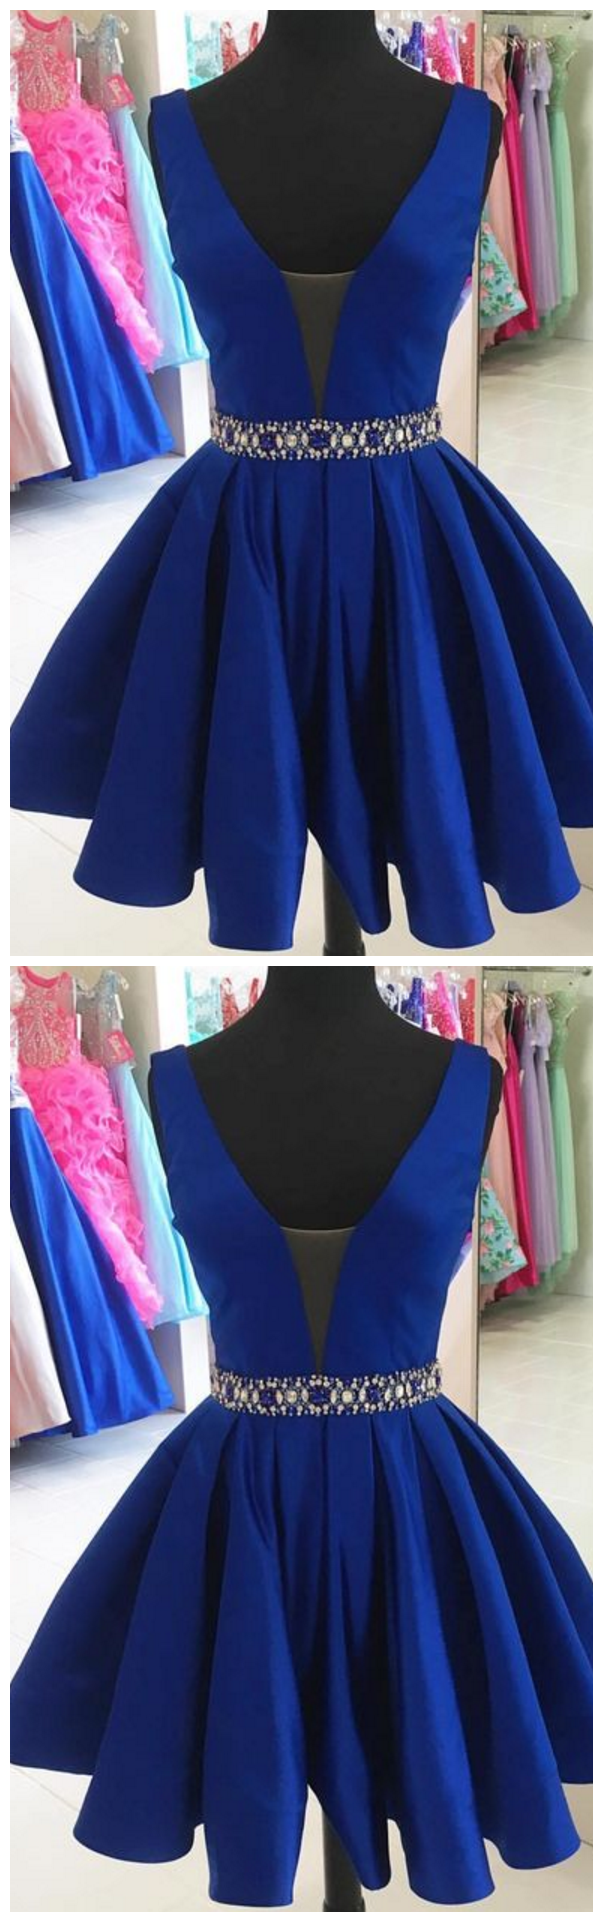 Short Royal Blue Homecoming Dress,v-neck Short Prom Dresses,party Dress